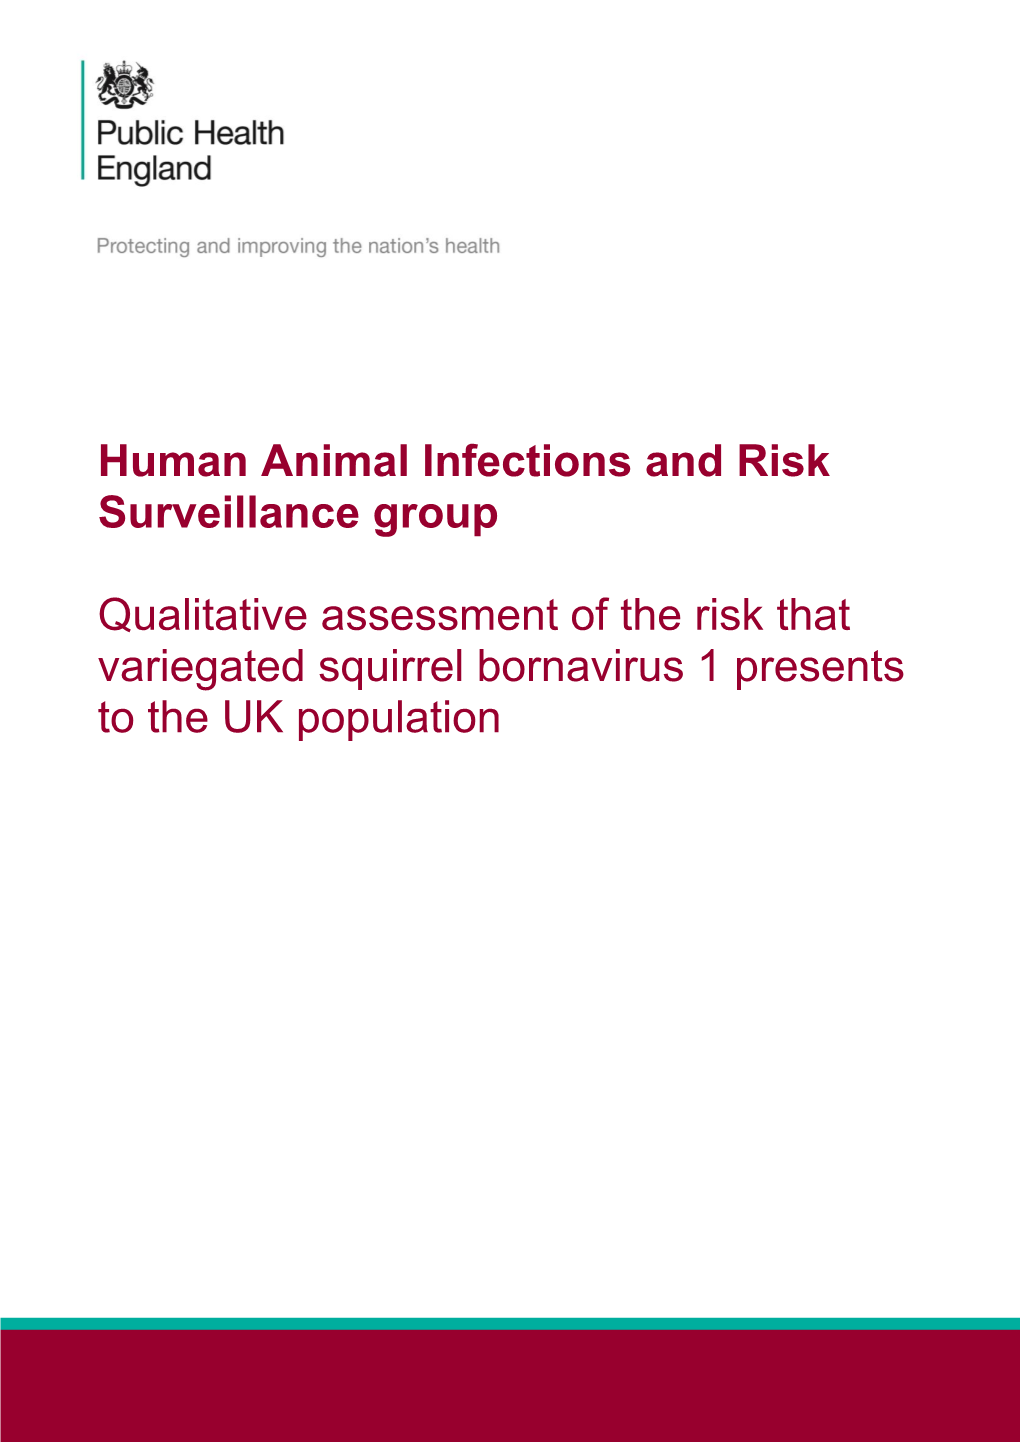 Squirrel Bornavirus 1 Presents to the UK Population